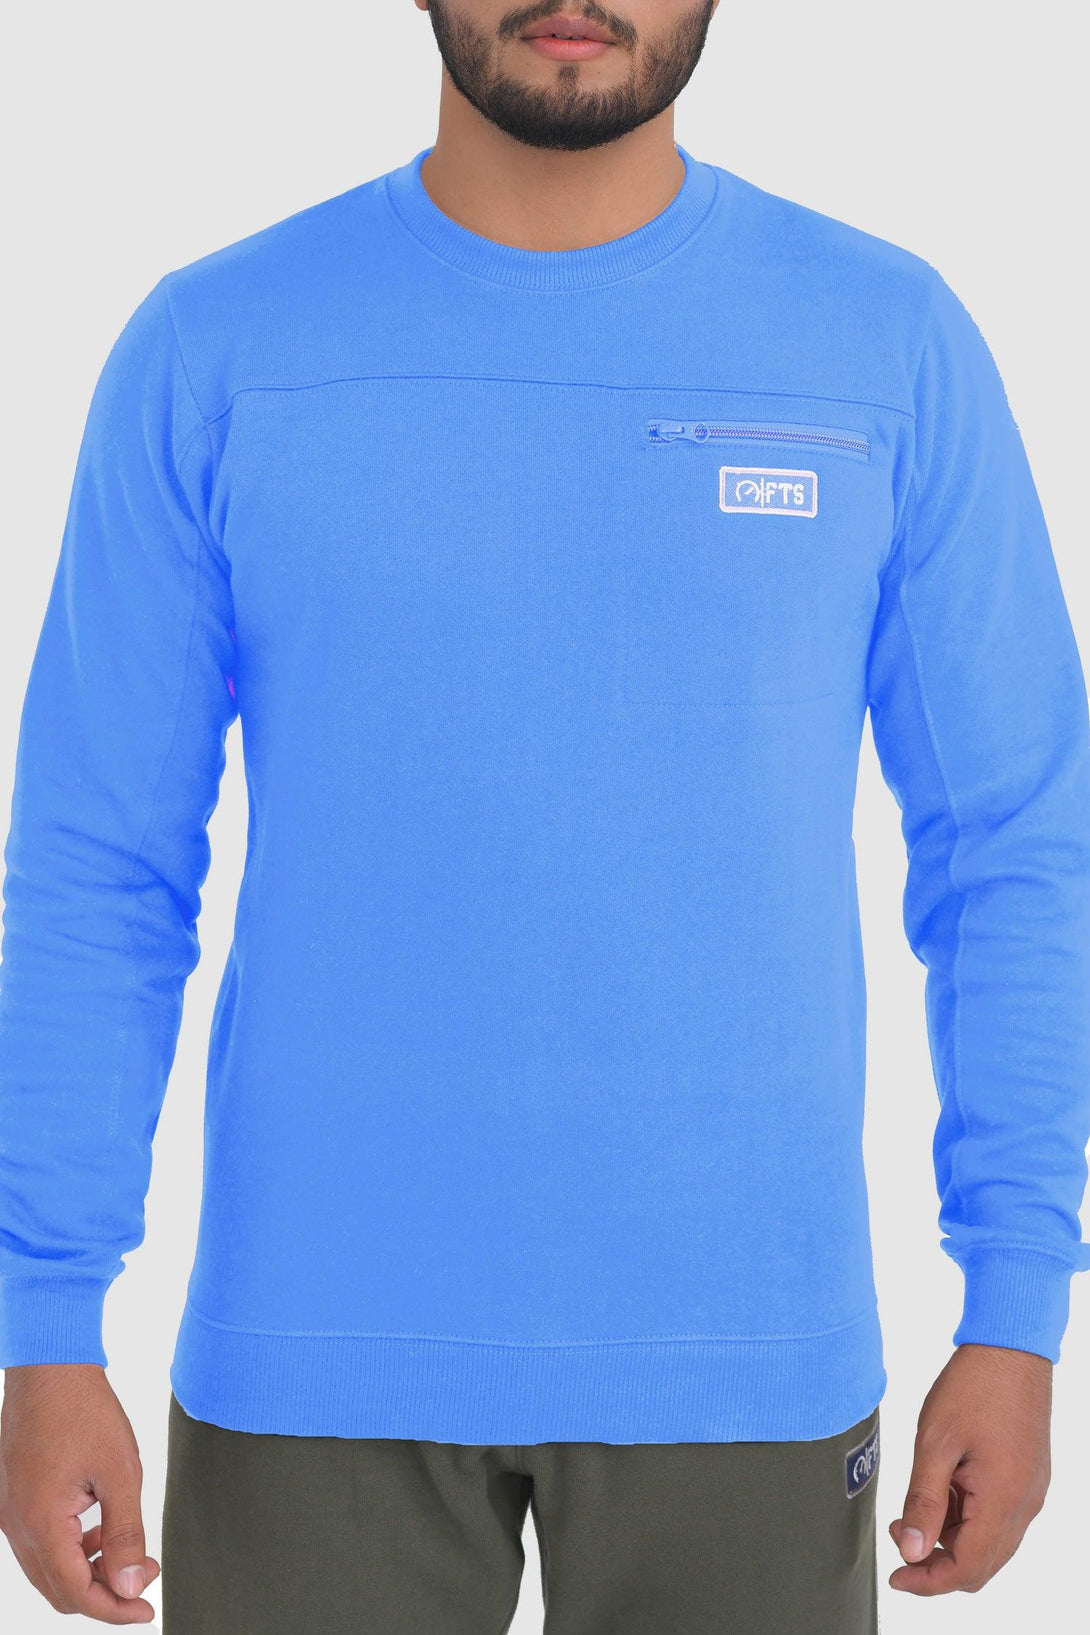 Sweatshirts CHEST-ZIP | LIGHT BLUE - FTS